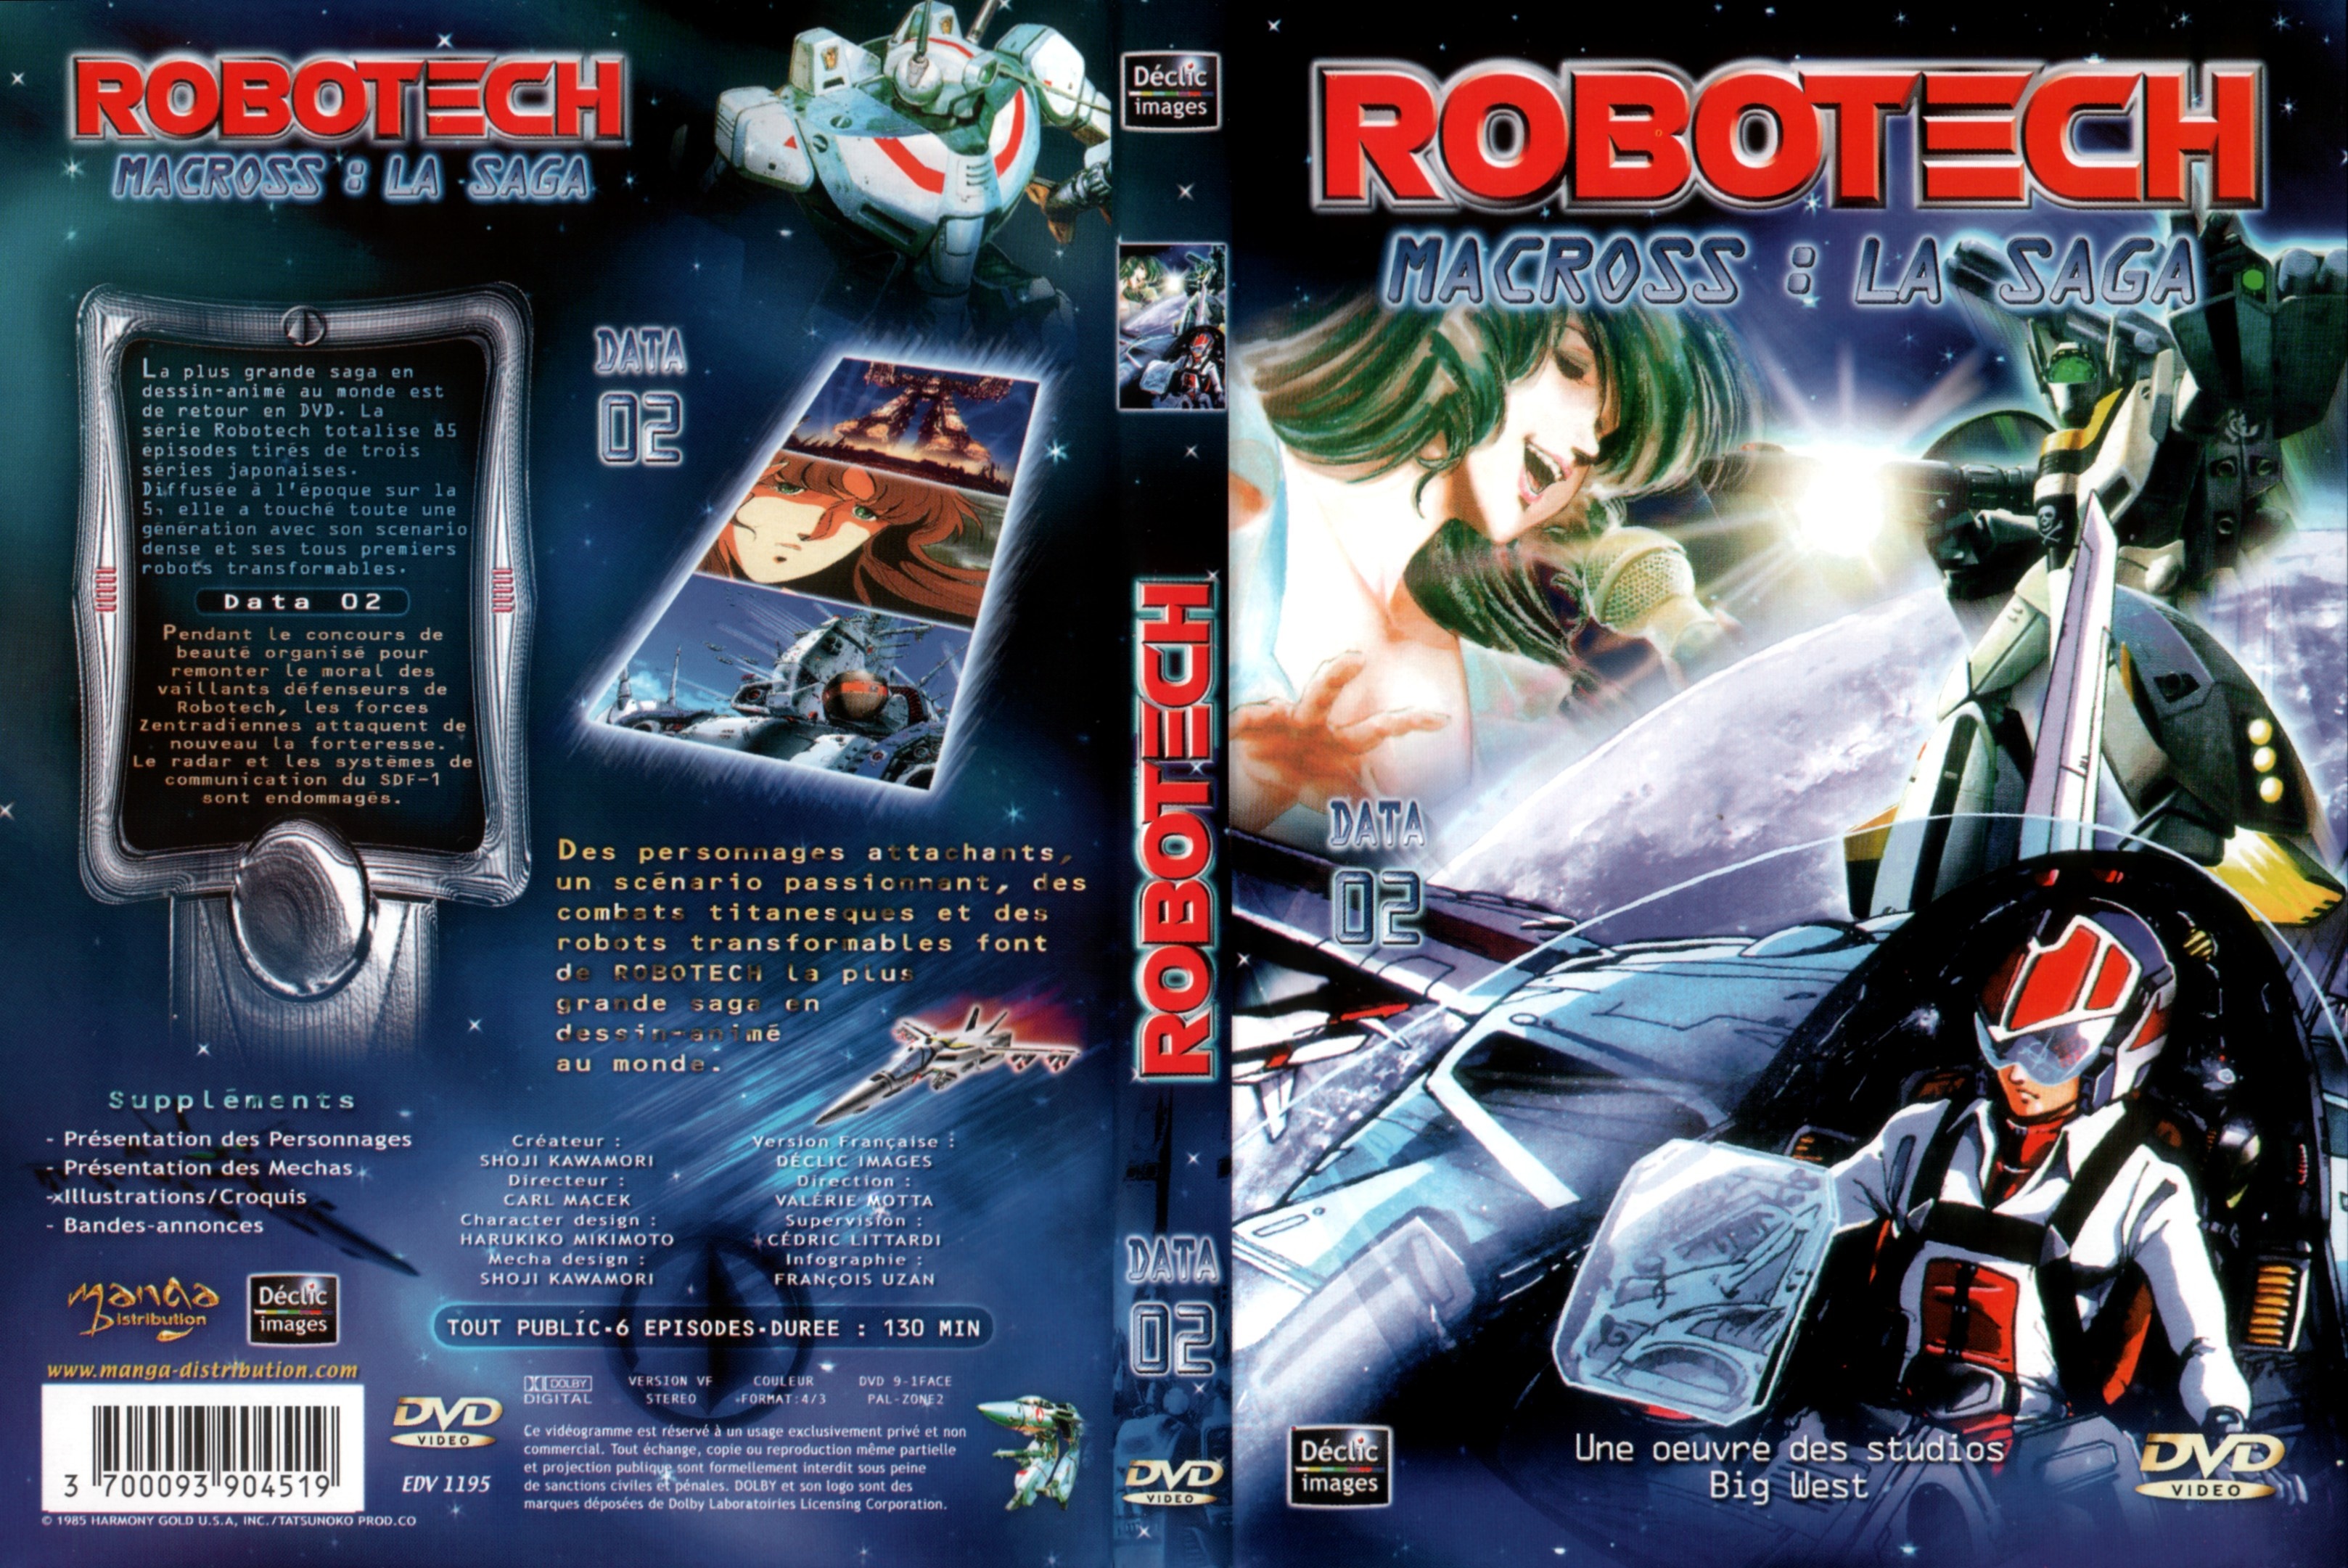 Jaquette DVD Robotech Macross la saga vol 2